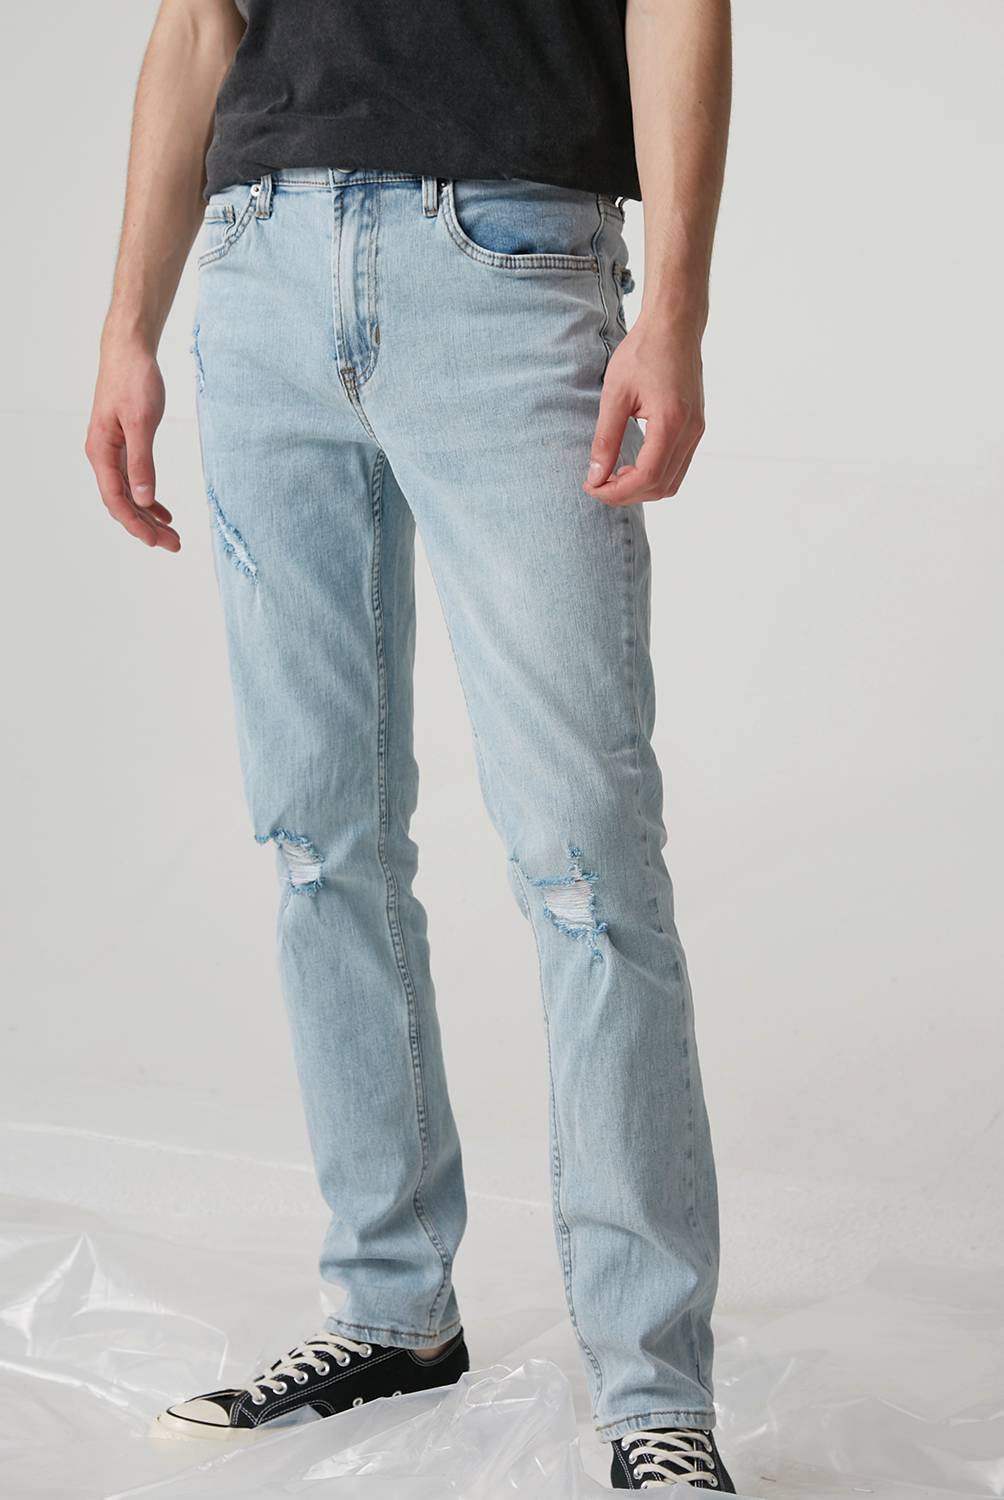 AMERICANINO - Americanino Jeans Skinny Fit Hombre